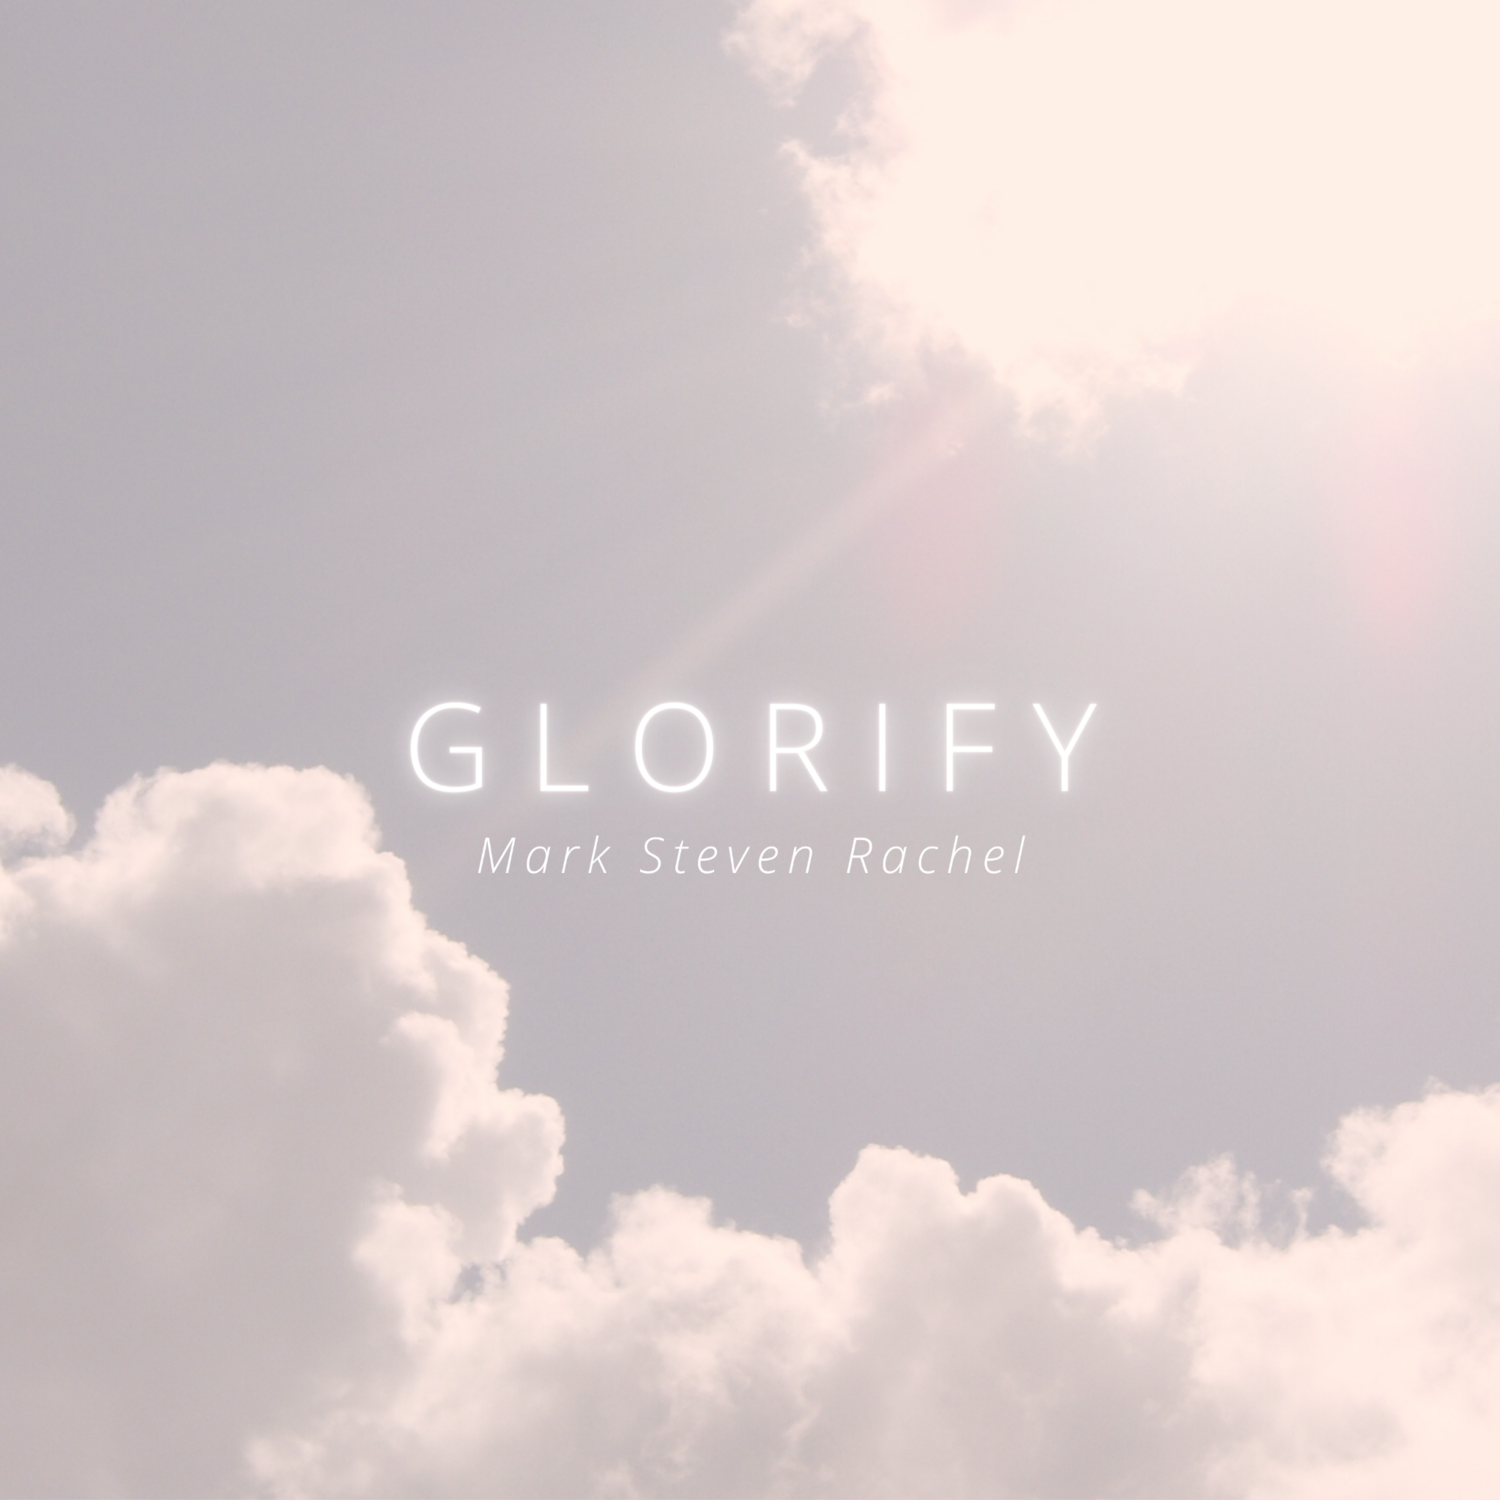 Glorify - Mark Steven Rachel